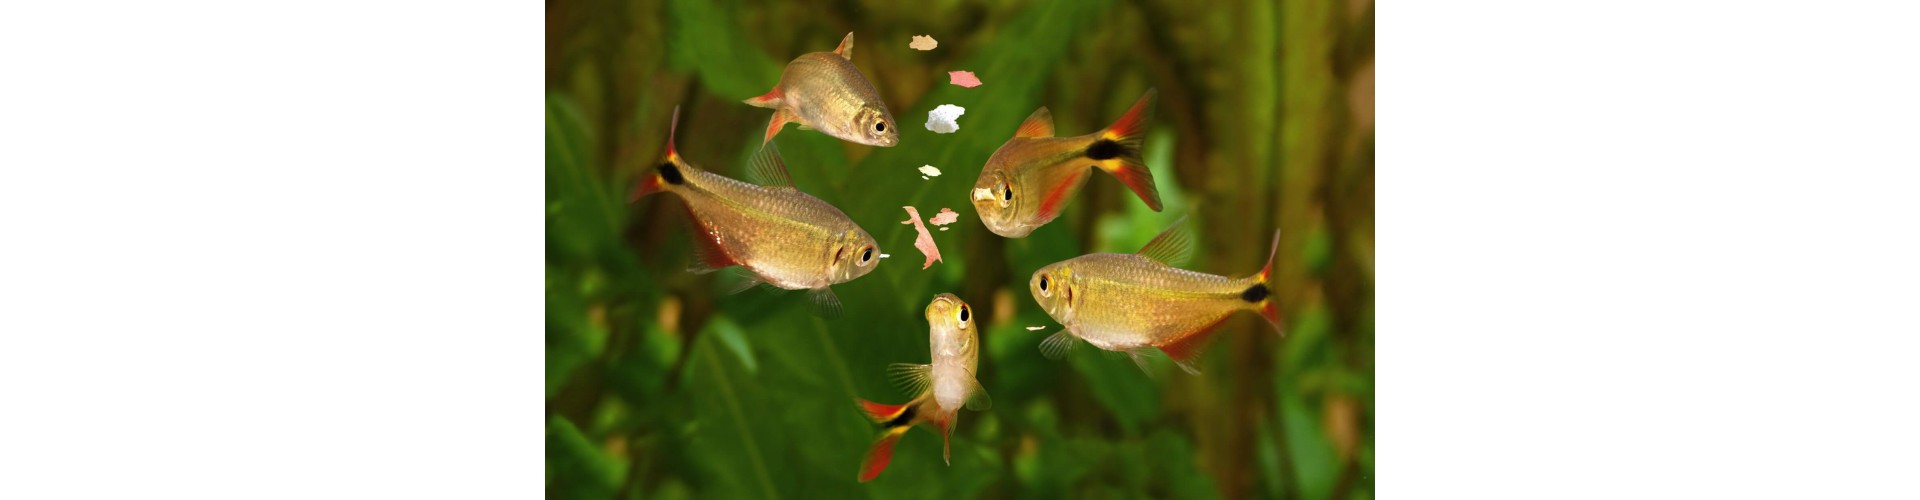 Научная перспектива: как работает прикормка на поведение рыб